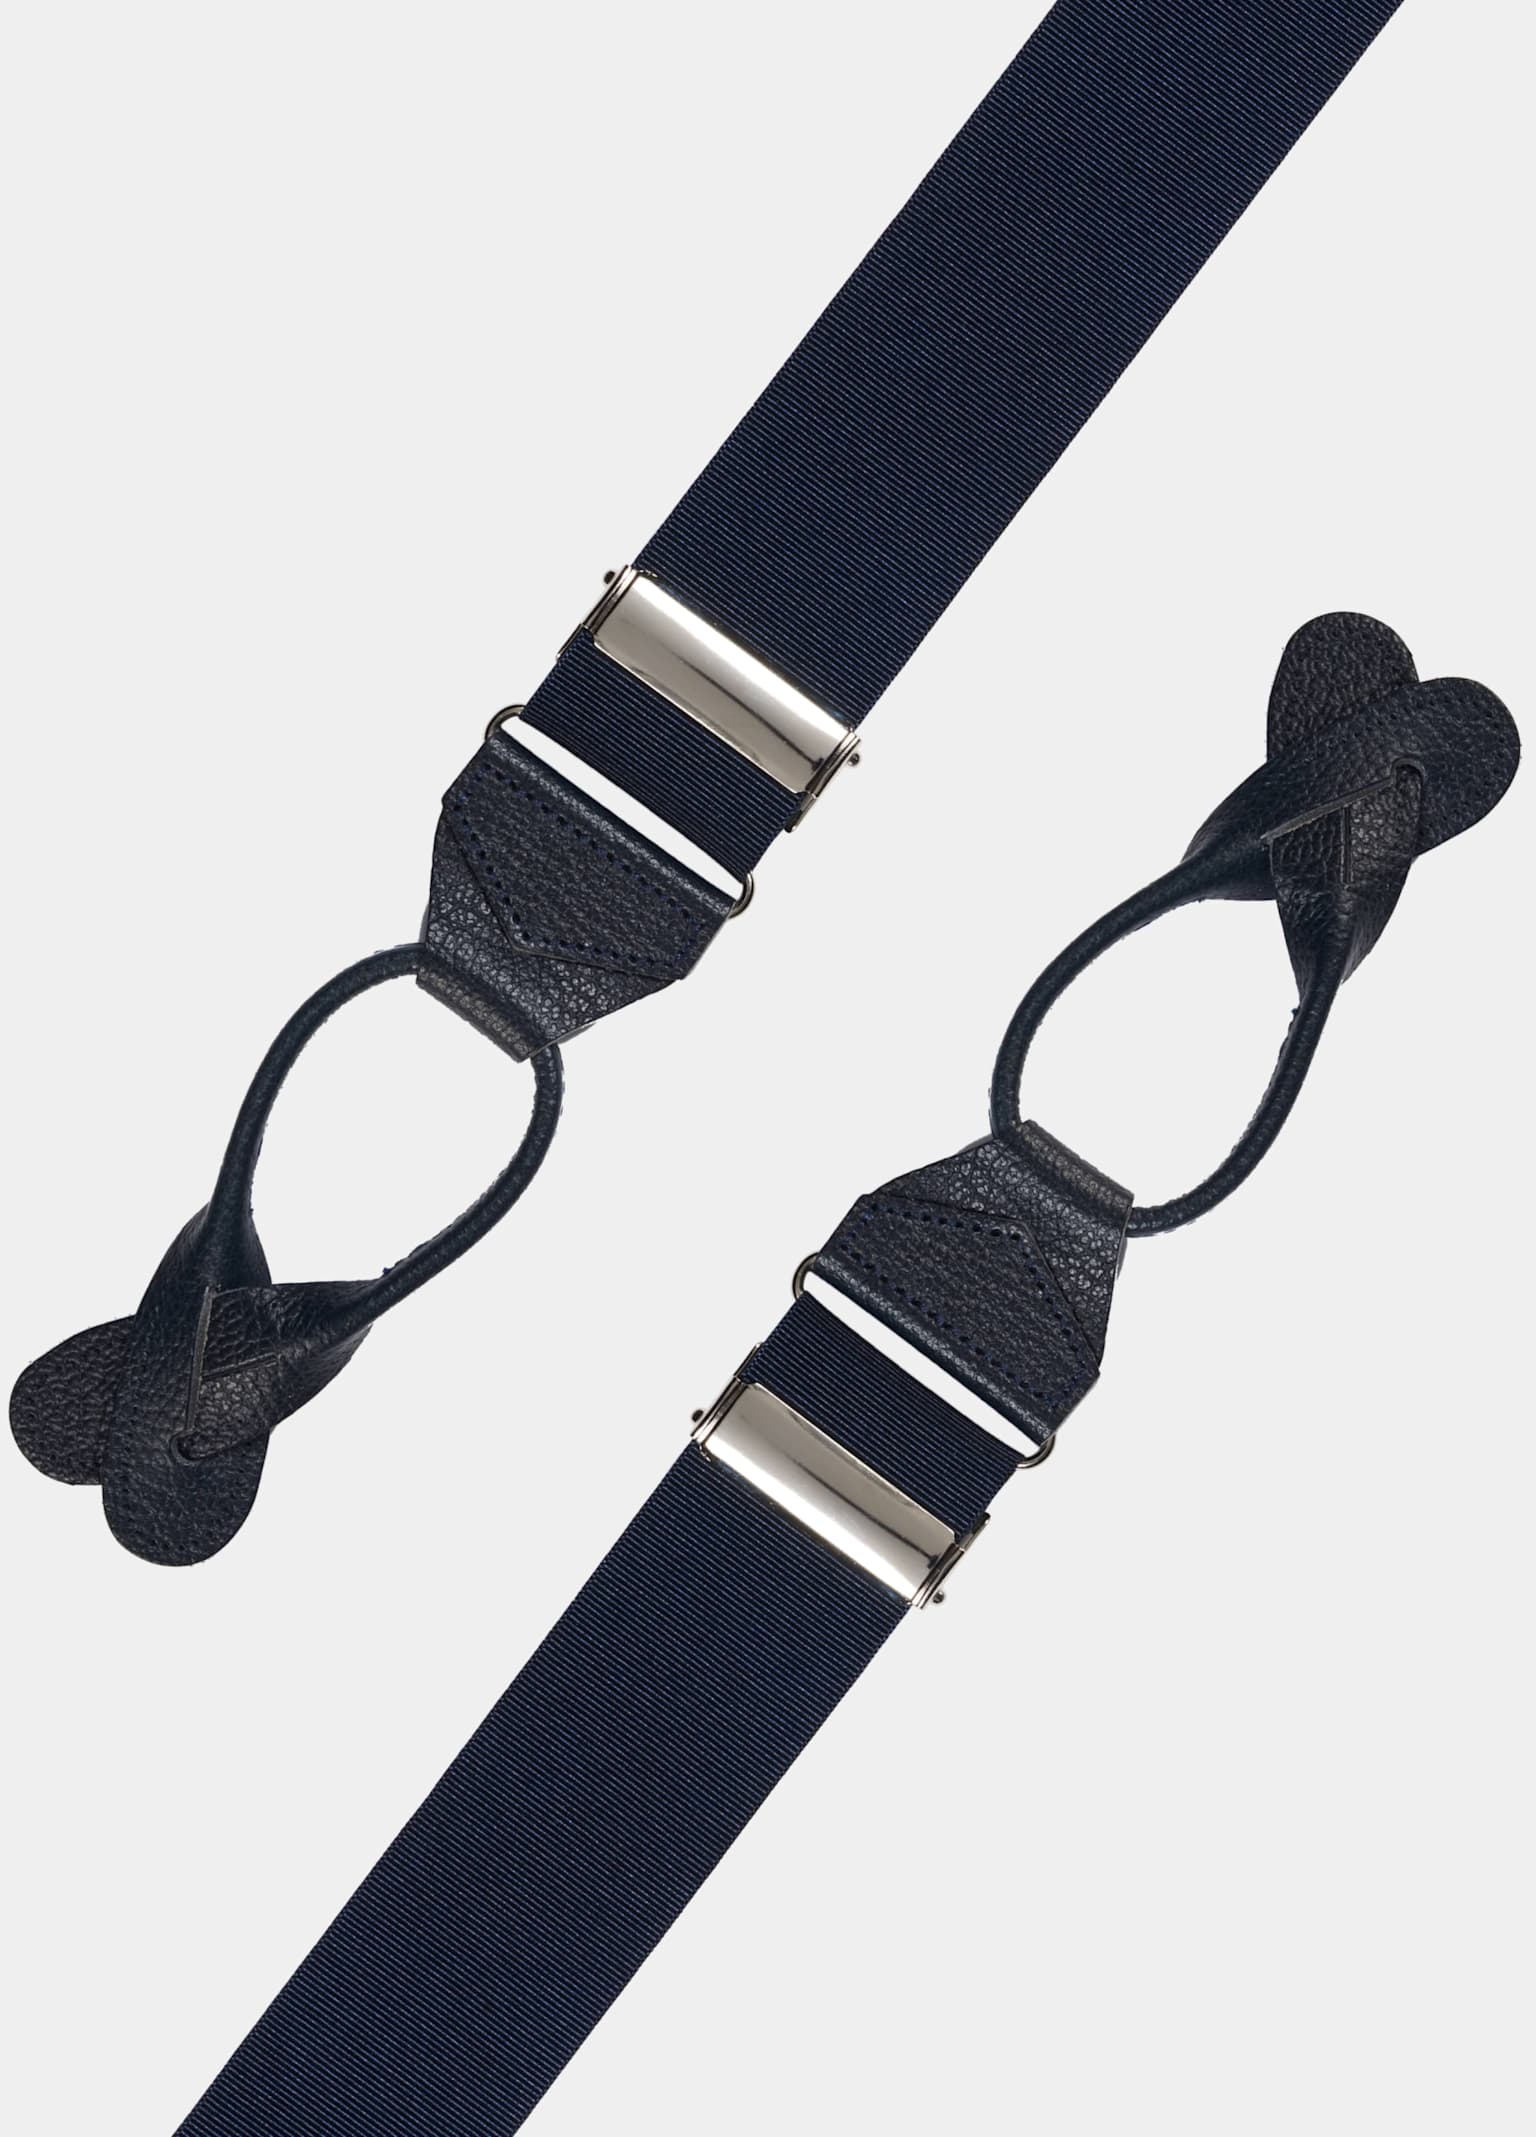 Image featuring navy suit suspenders.